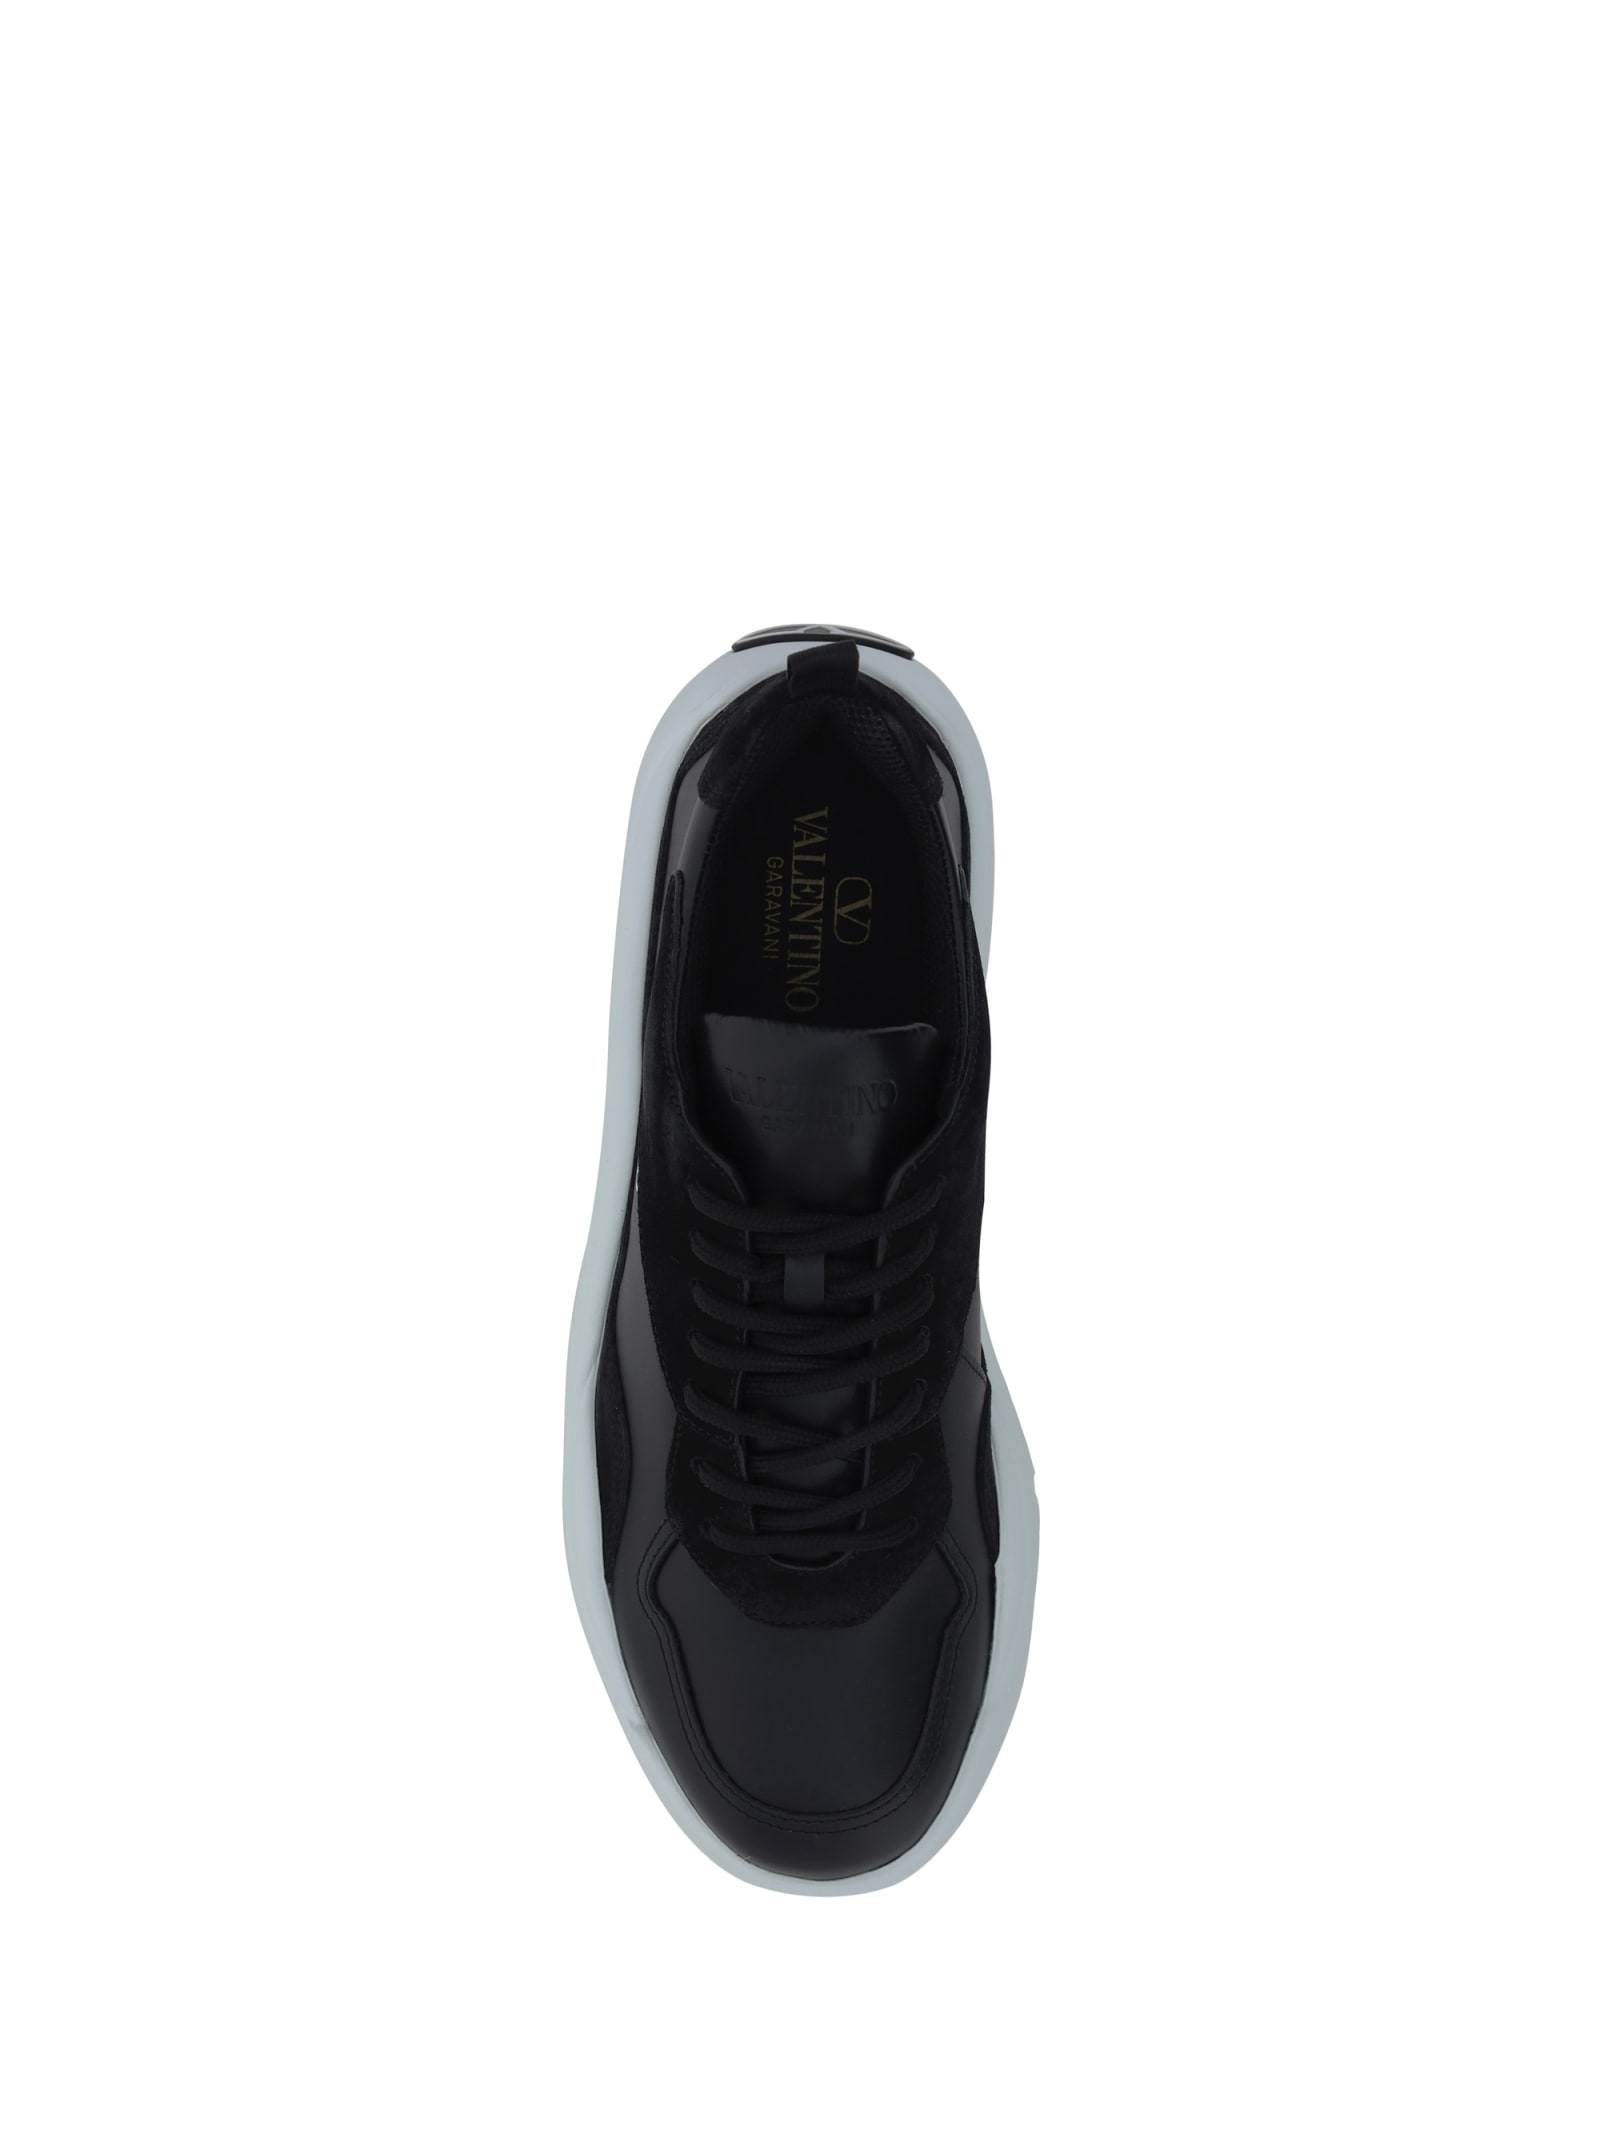 Shop Valentino Garavani Gumboy Sneakers In Nero/nero/bianco-nero-bianco